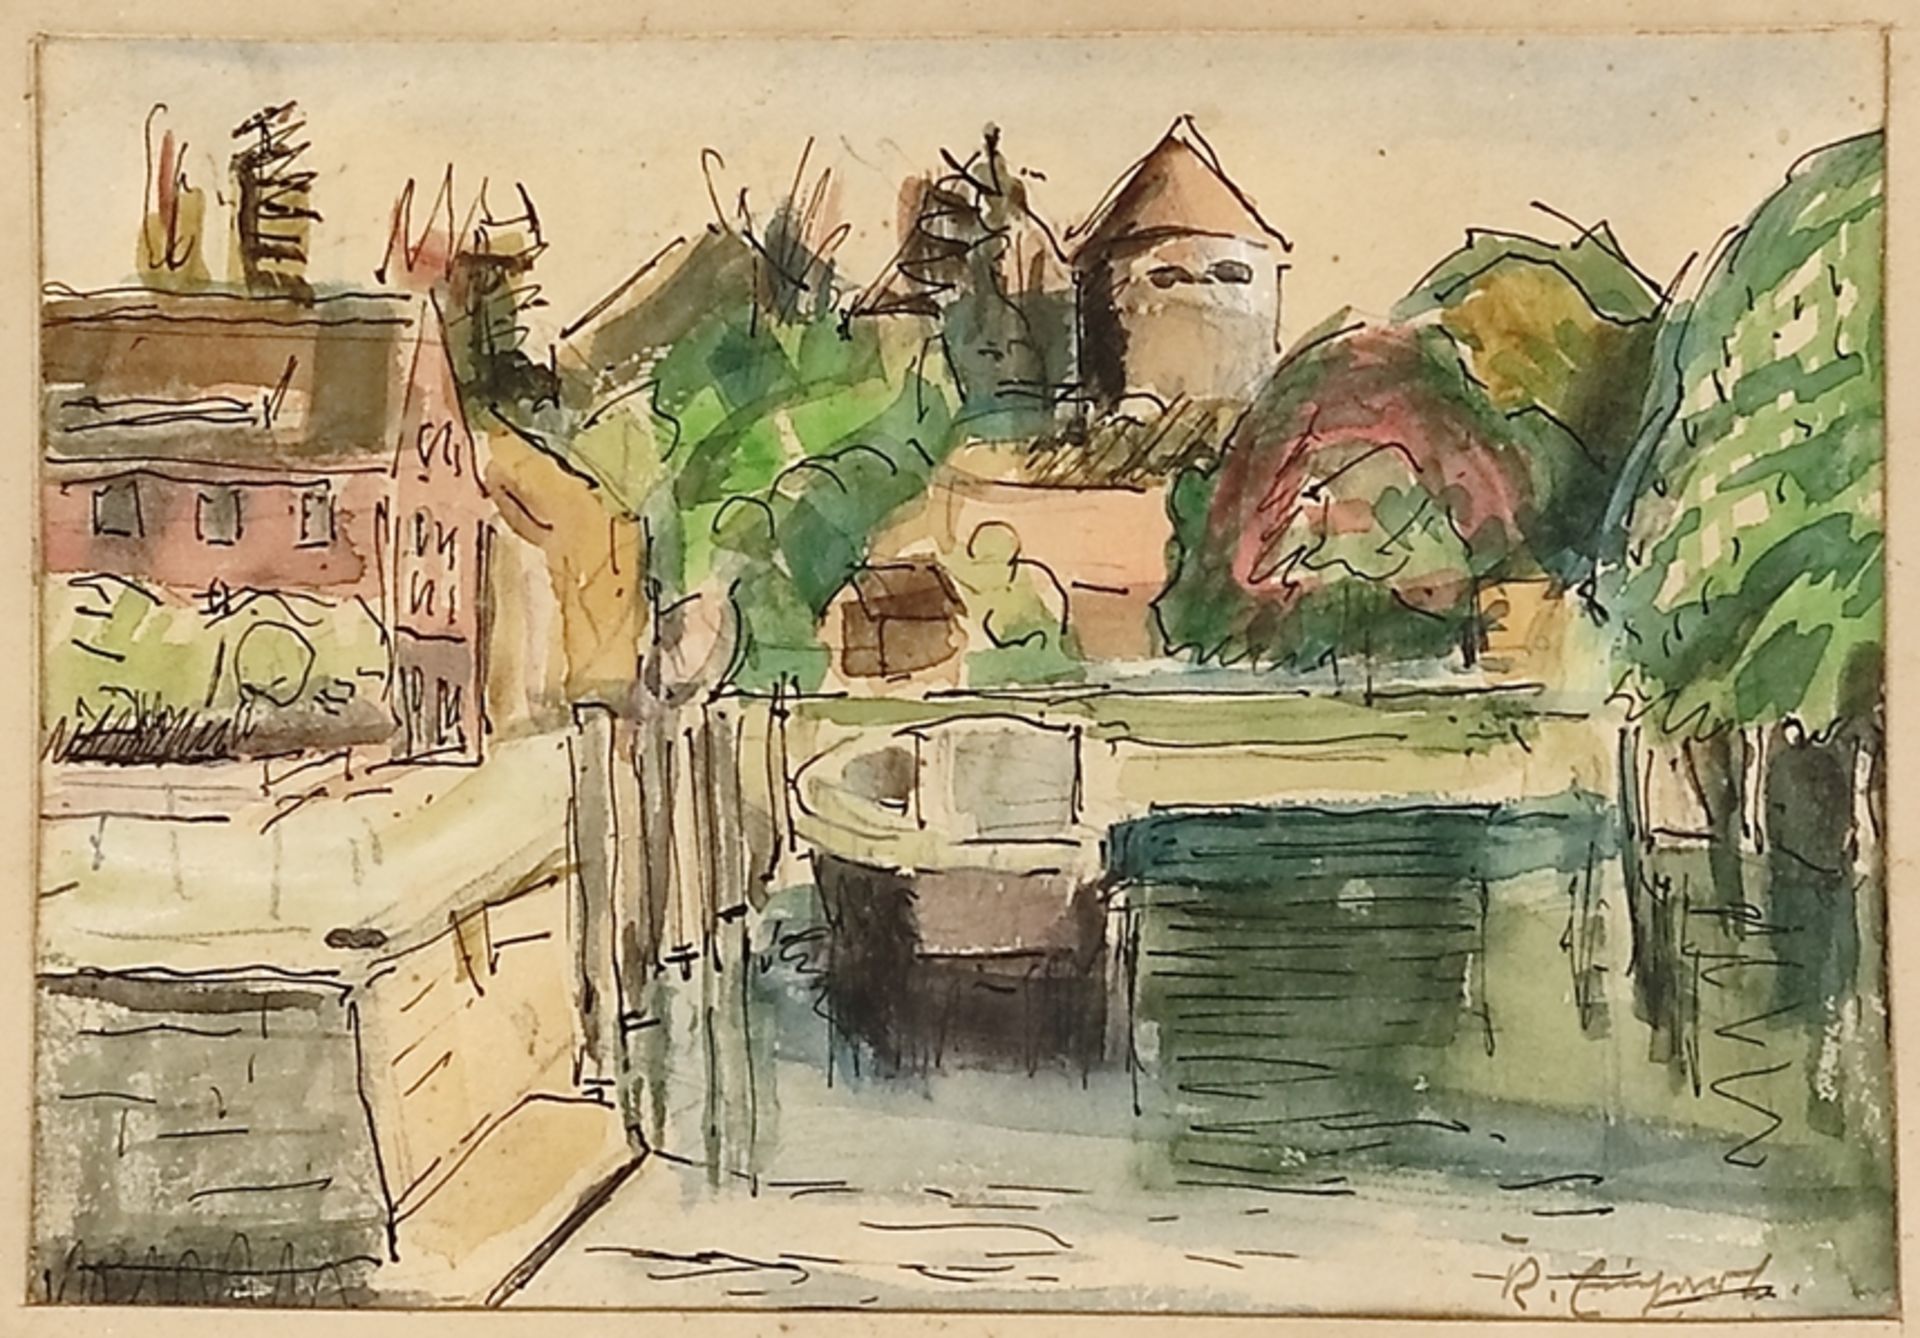 Einhart, Karl (1884-1967 Constance) "Small harbor in Überlingen", watercolor drawing on paper, sign